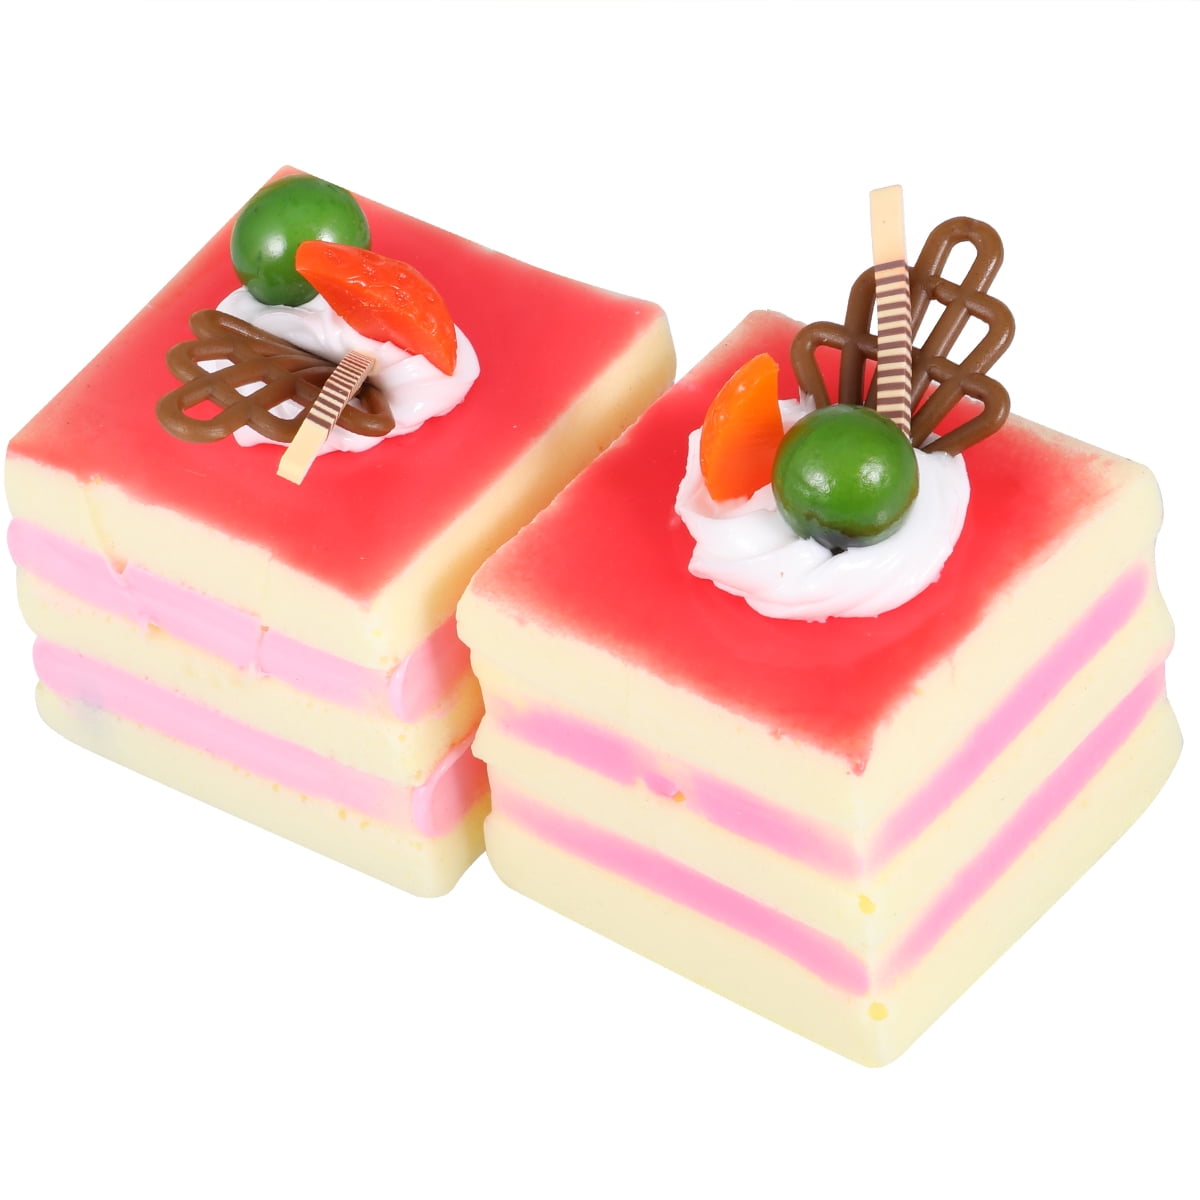 Miniature Birthday Cake Model Simulation Food Kitchen Toy Doll House  Accesso-$b | eBay